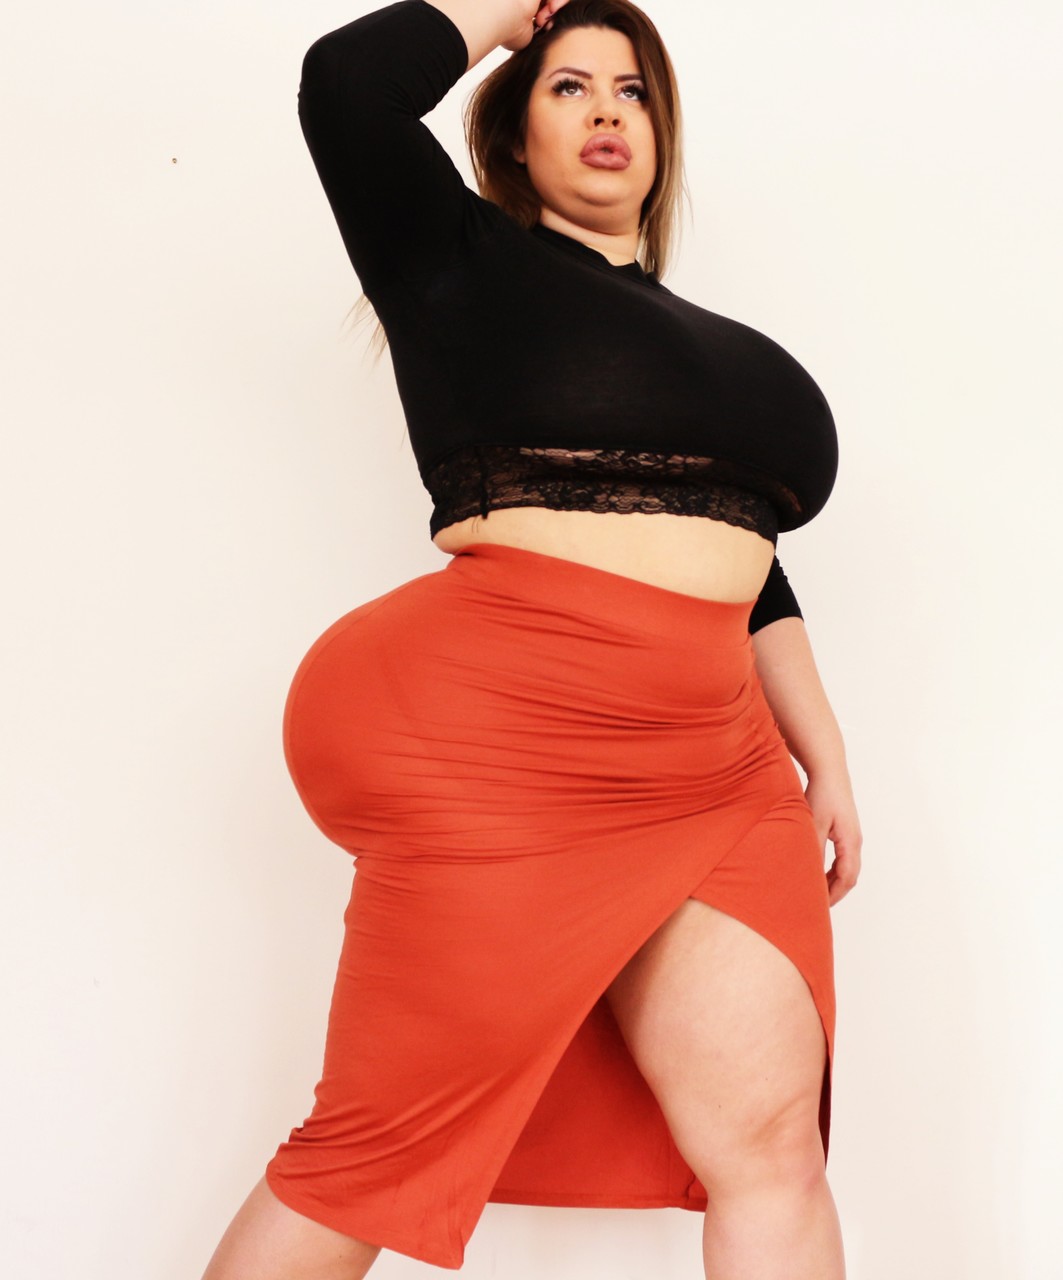 Stunning MILF fatty Natasha Crown flaunting her very big ass in a tight skirt 포르노 사진 #423816656 | Natasha Crown Pics, Natasha Crown, BBW, 모바일 포르노